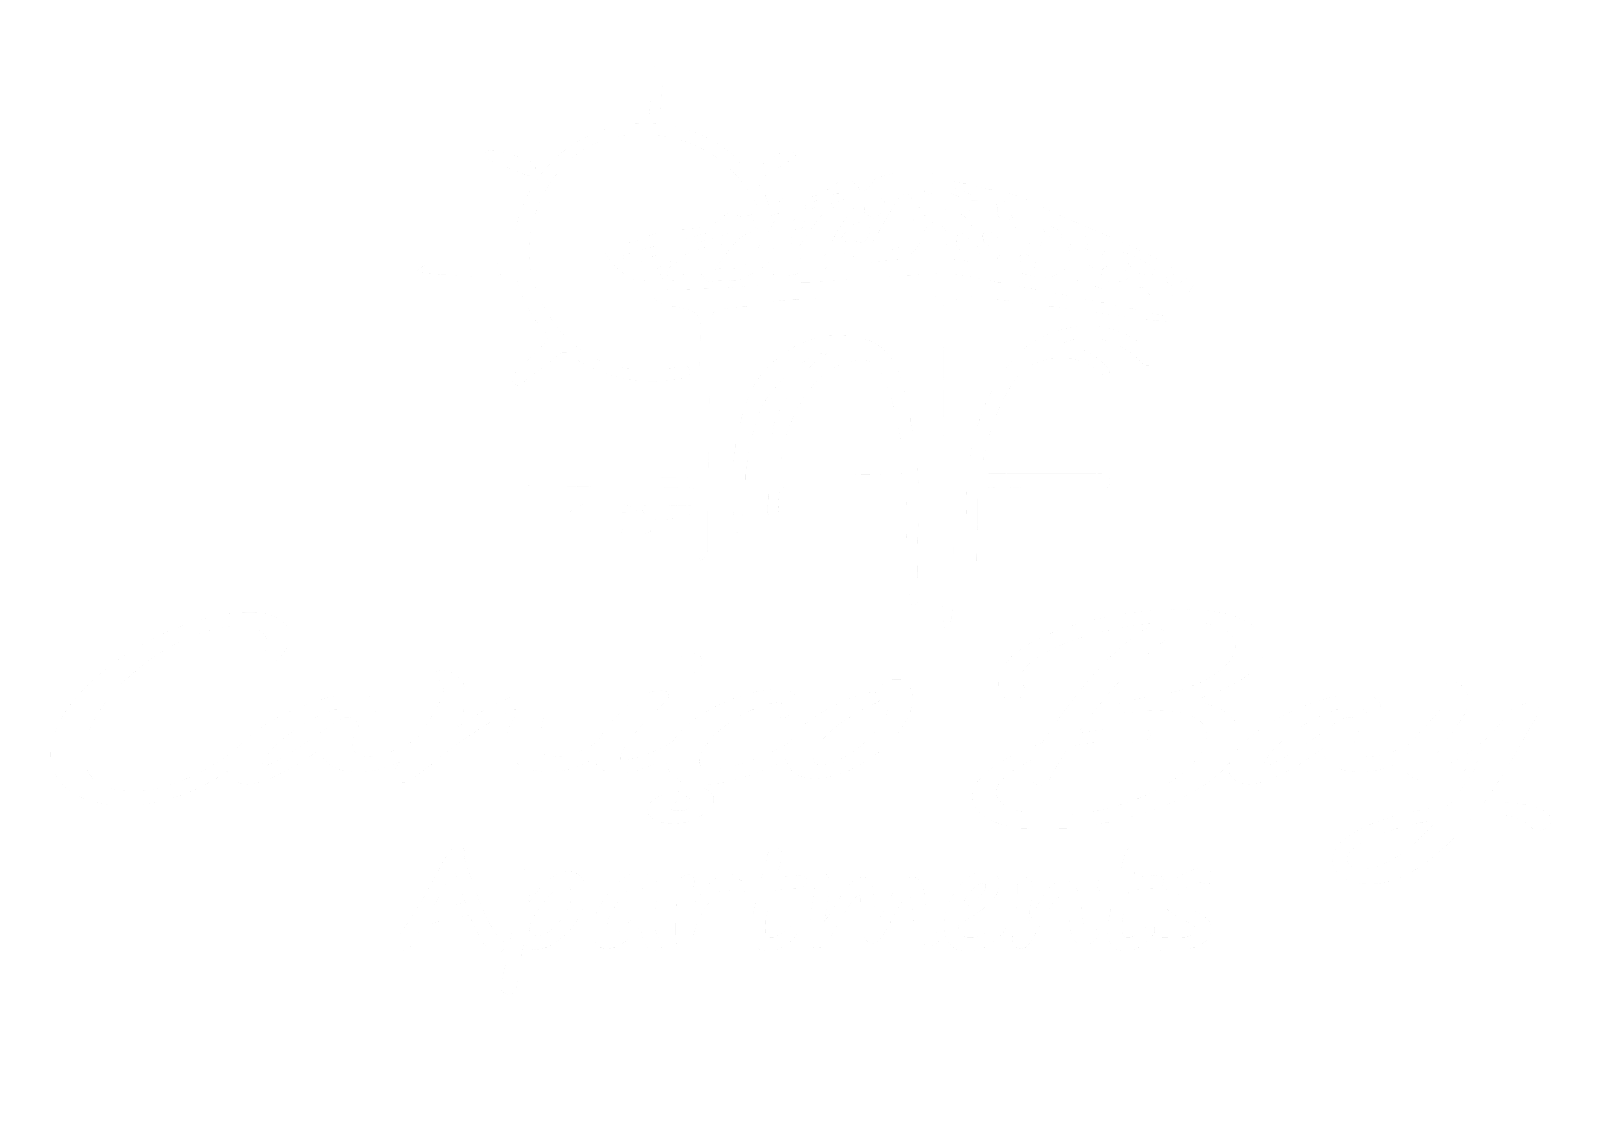 Notícia legal - Caniço Bay Apartments